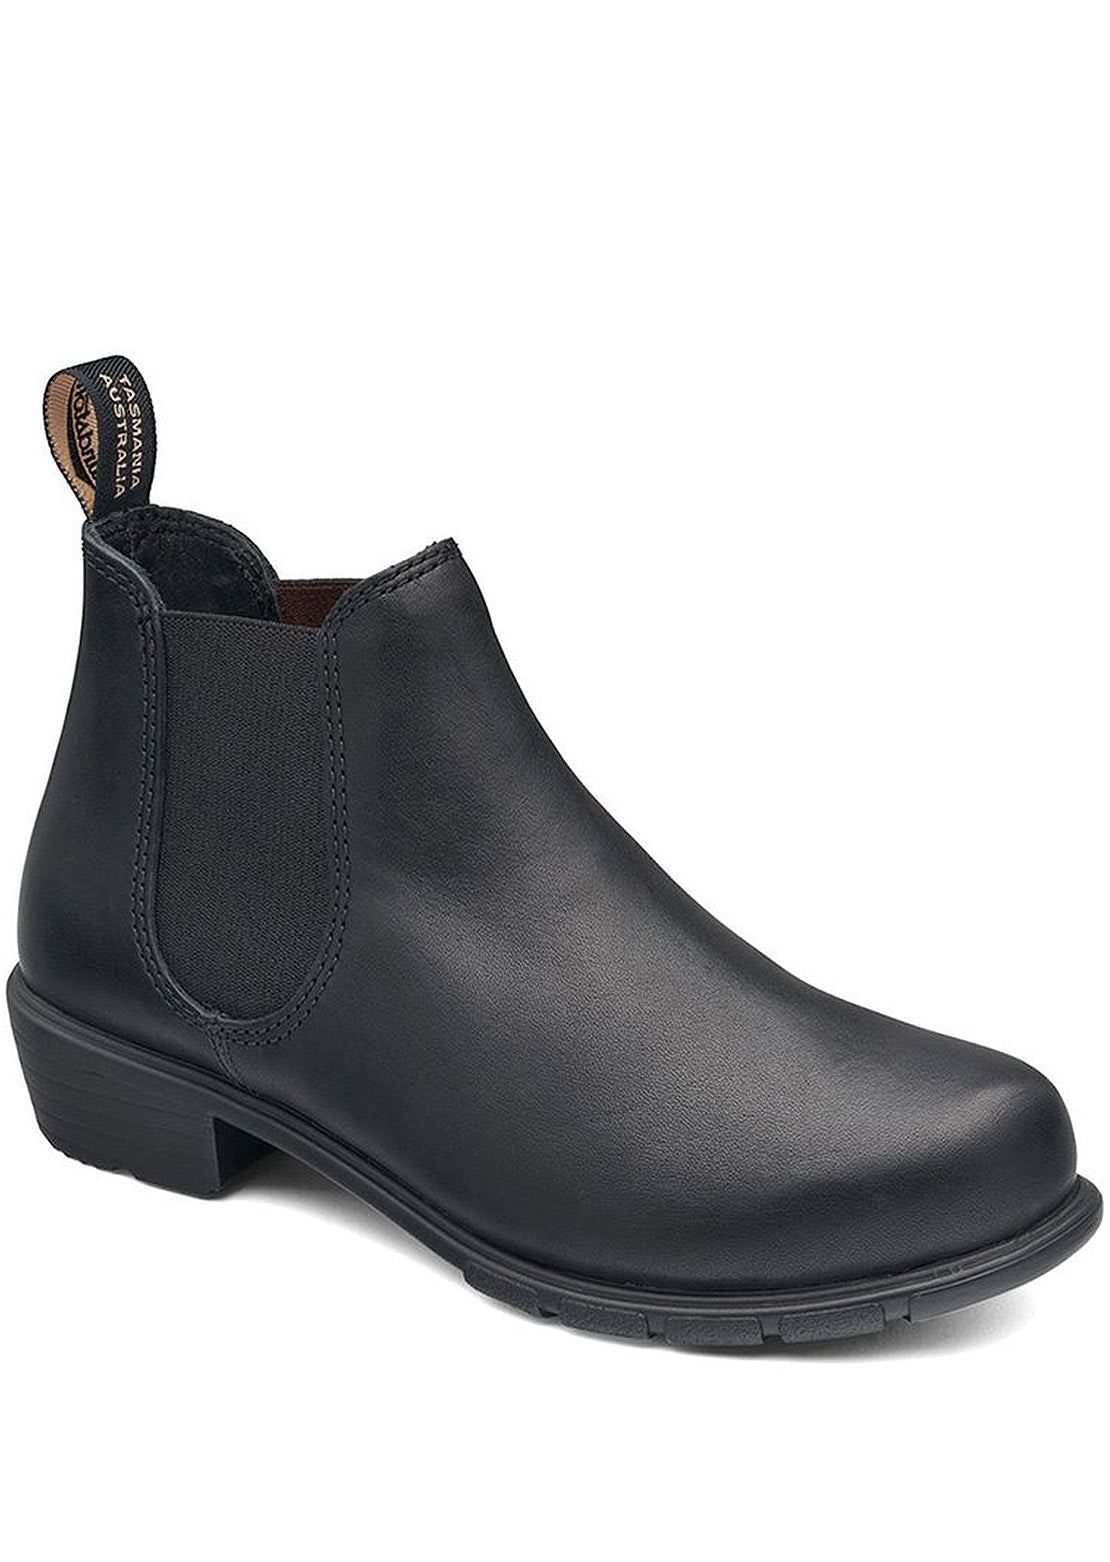 Blundstone Women’s 2068 Low Heels Boots Black